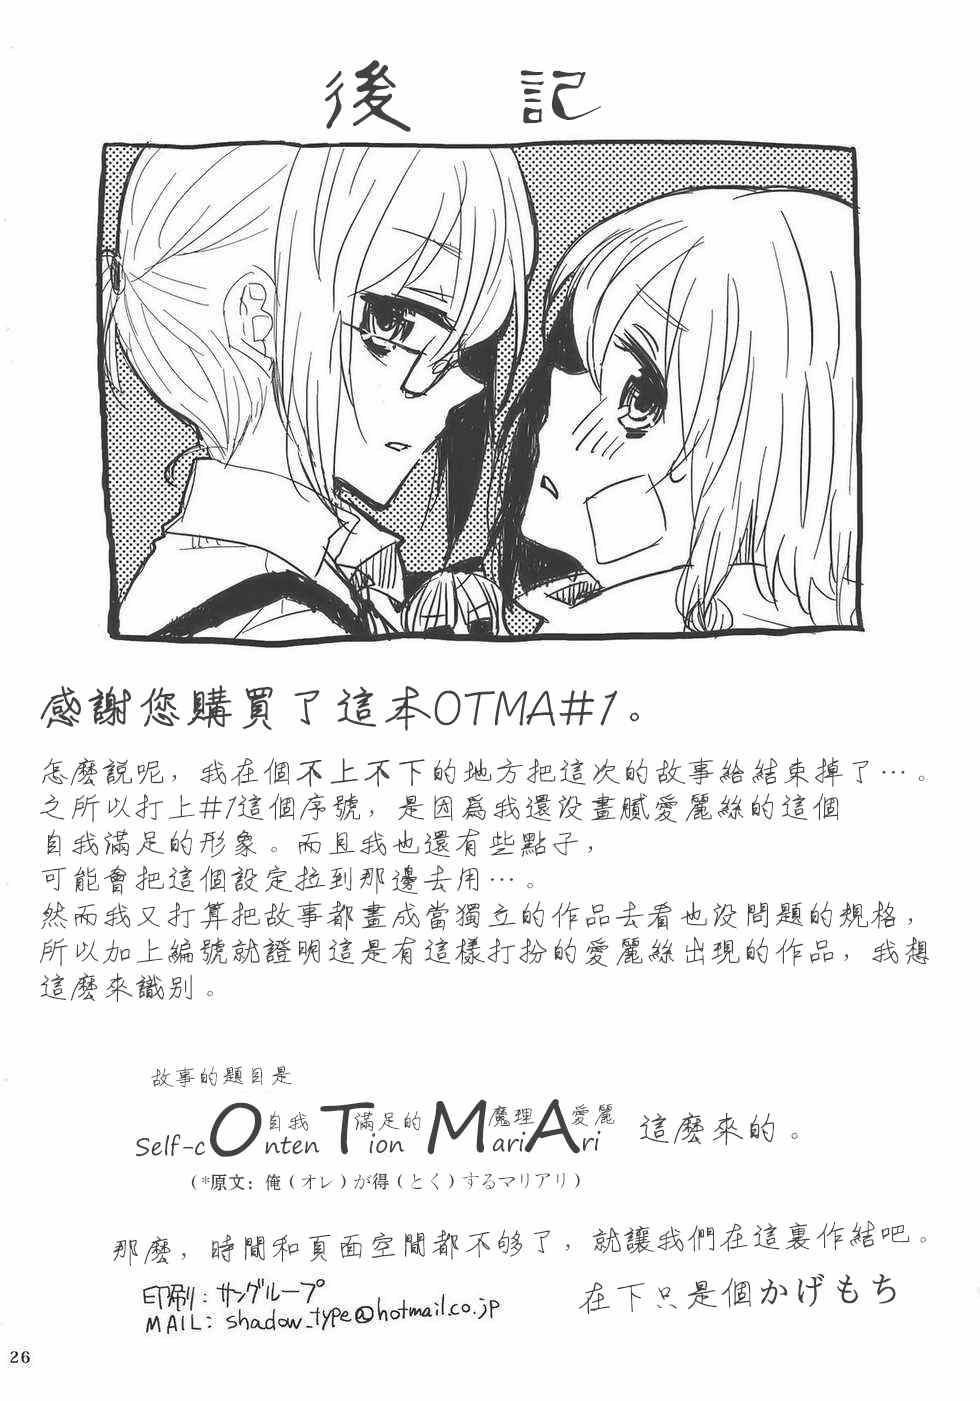 《OTMA#1》漫画 001集